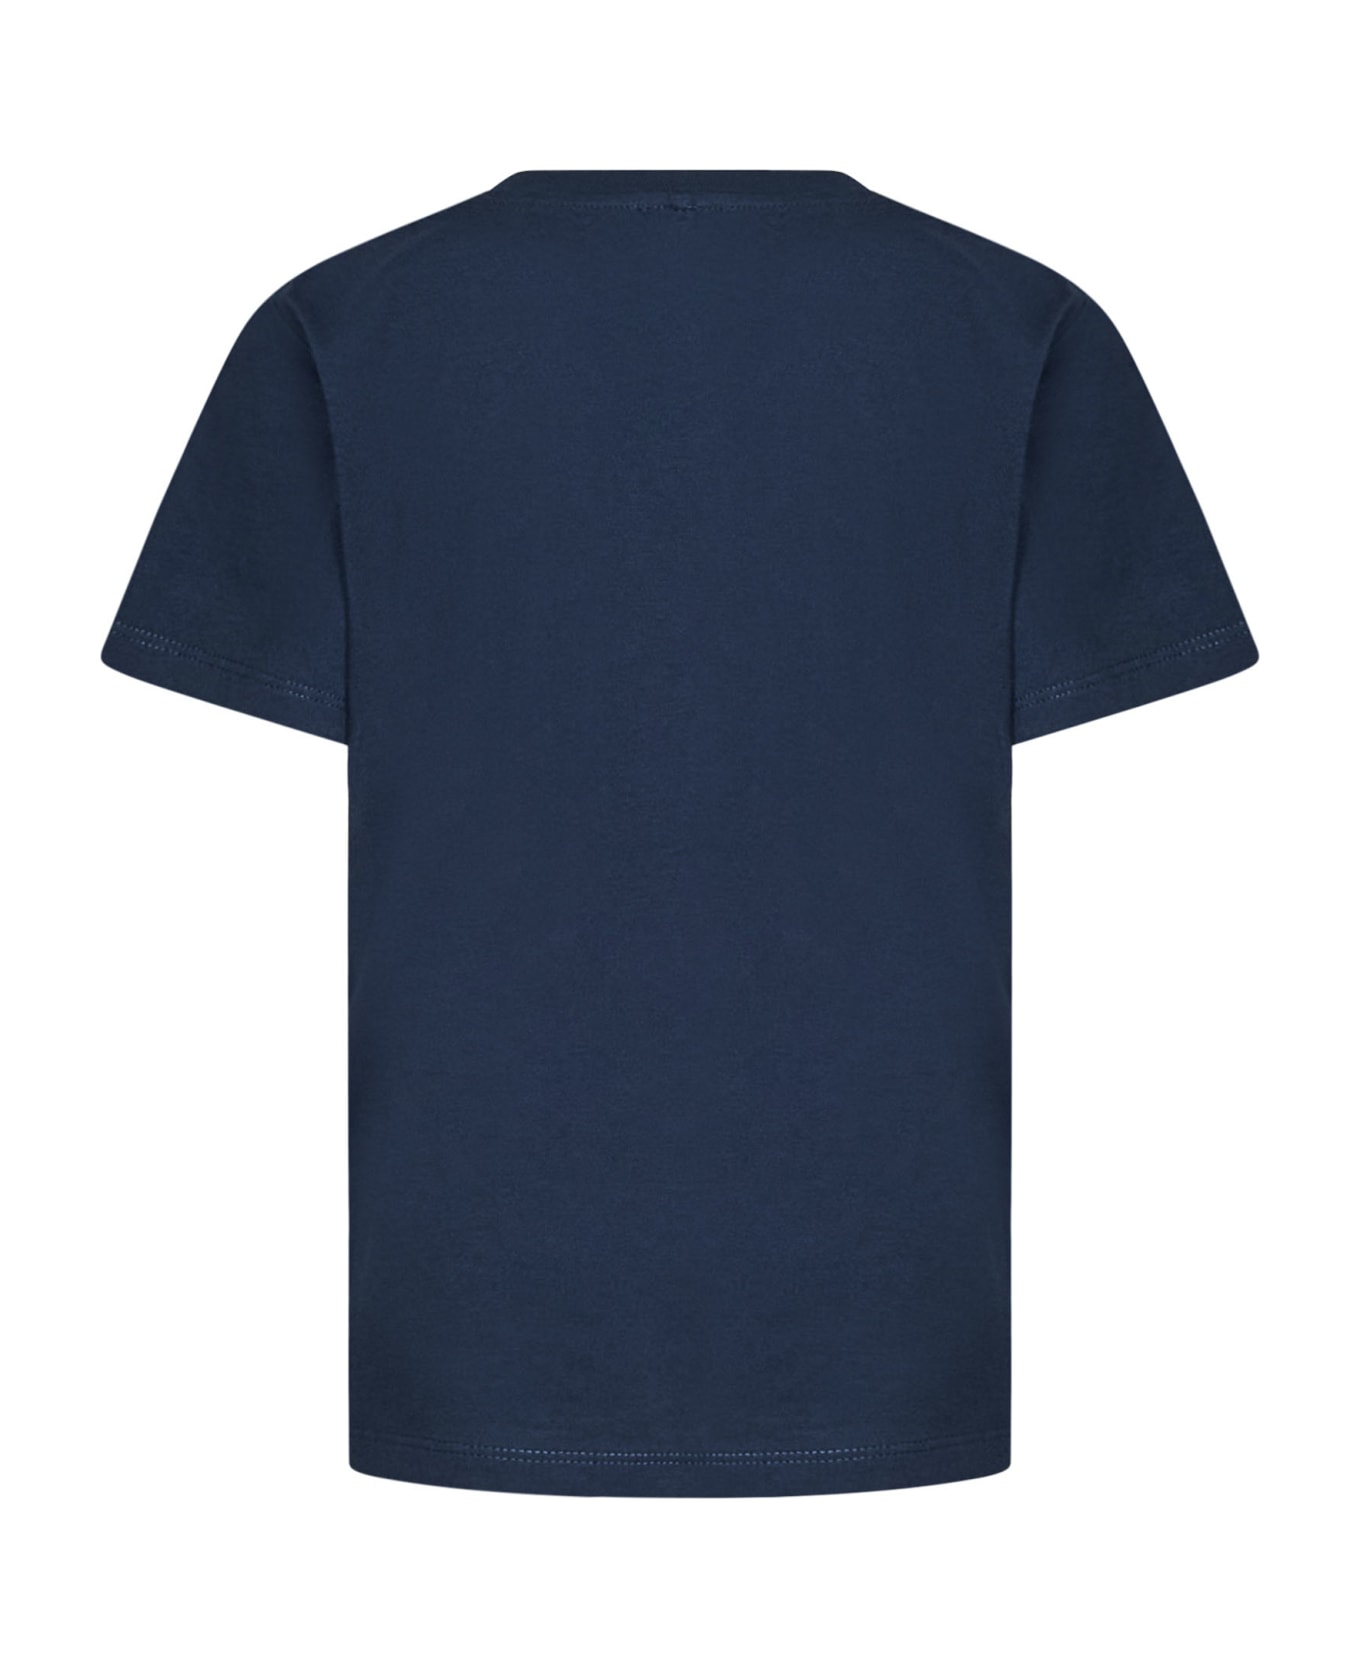 Stella McCartney Kids T-shirt - Blue